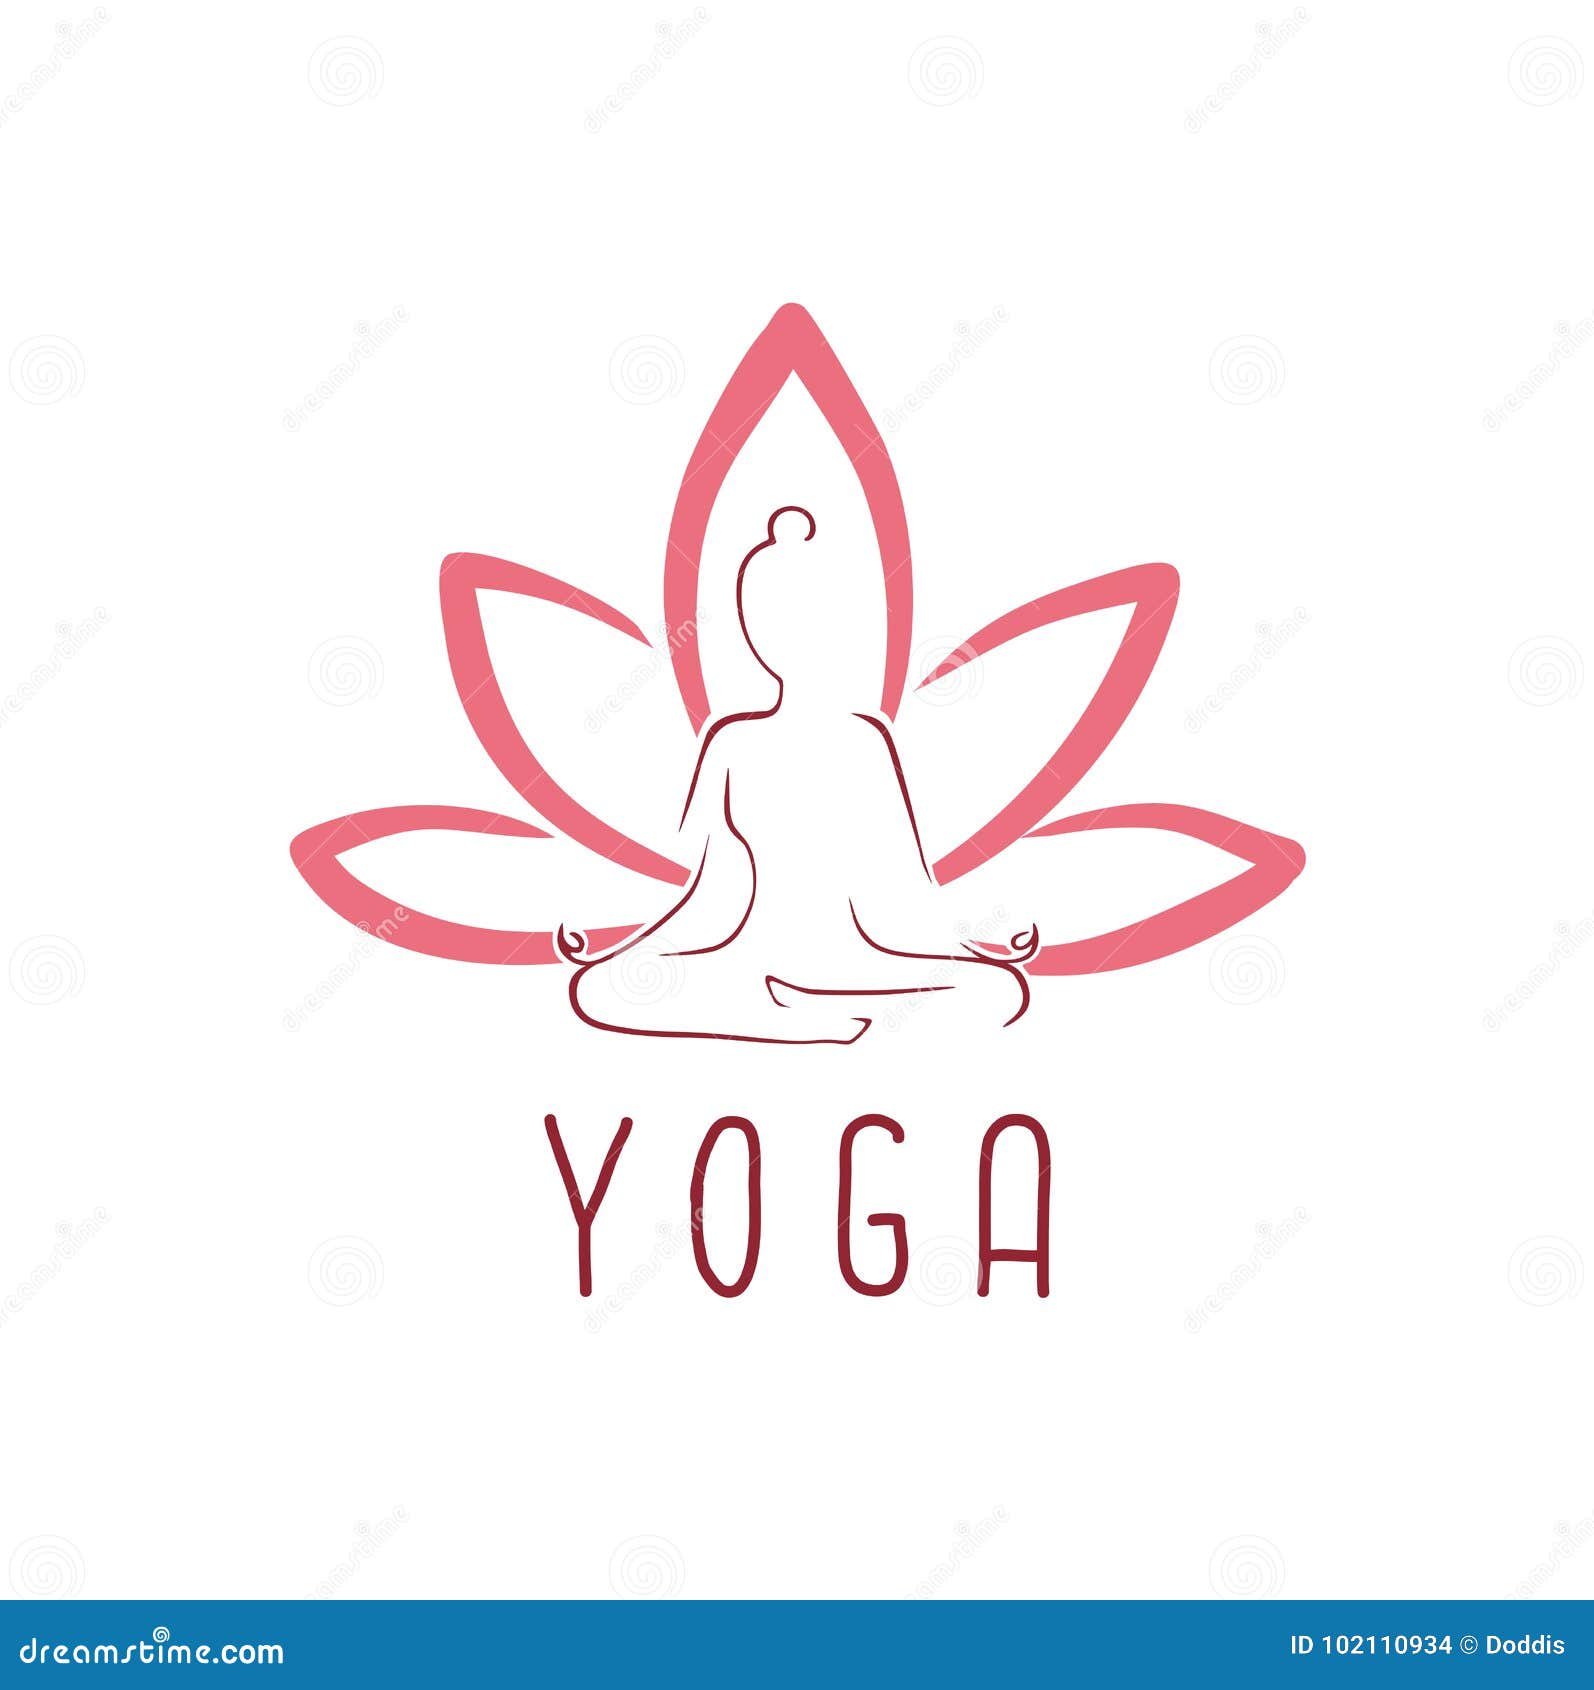 https://thumbs.dreamstime.com/z/lotus-yoga-logo-vector-design-template-102110934.jpg